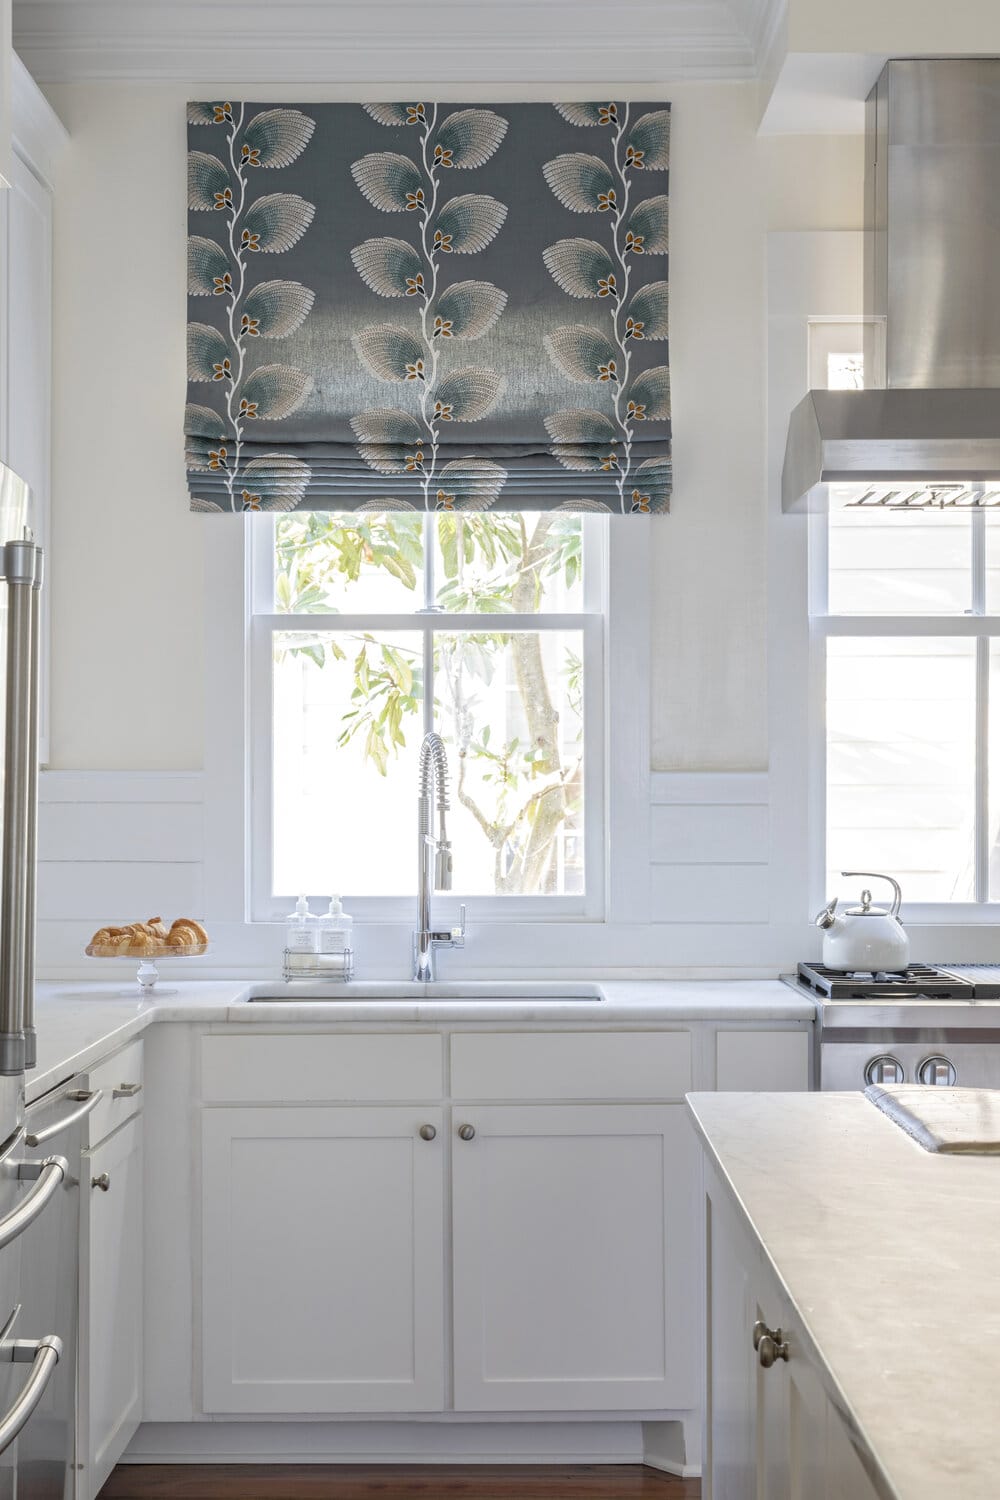 Allison Elebash Design | Julia Lynn Photography Mount Pleasant home - kitchen with hanging lanterns over island - kitchen design - kitchen inspo - kitchen inspiration